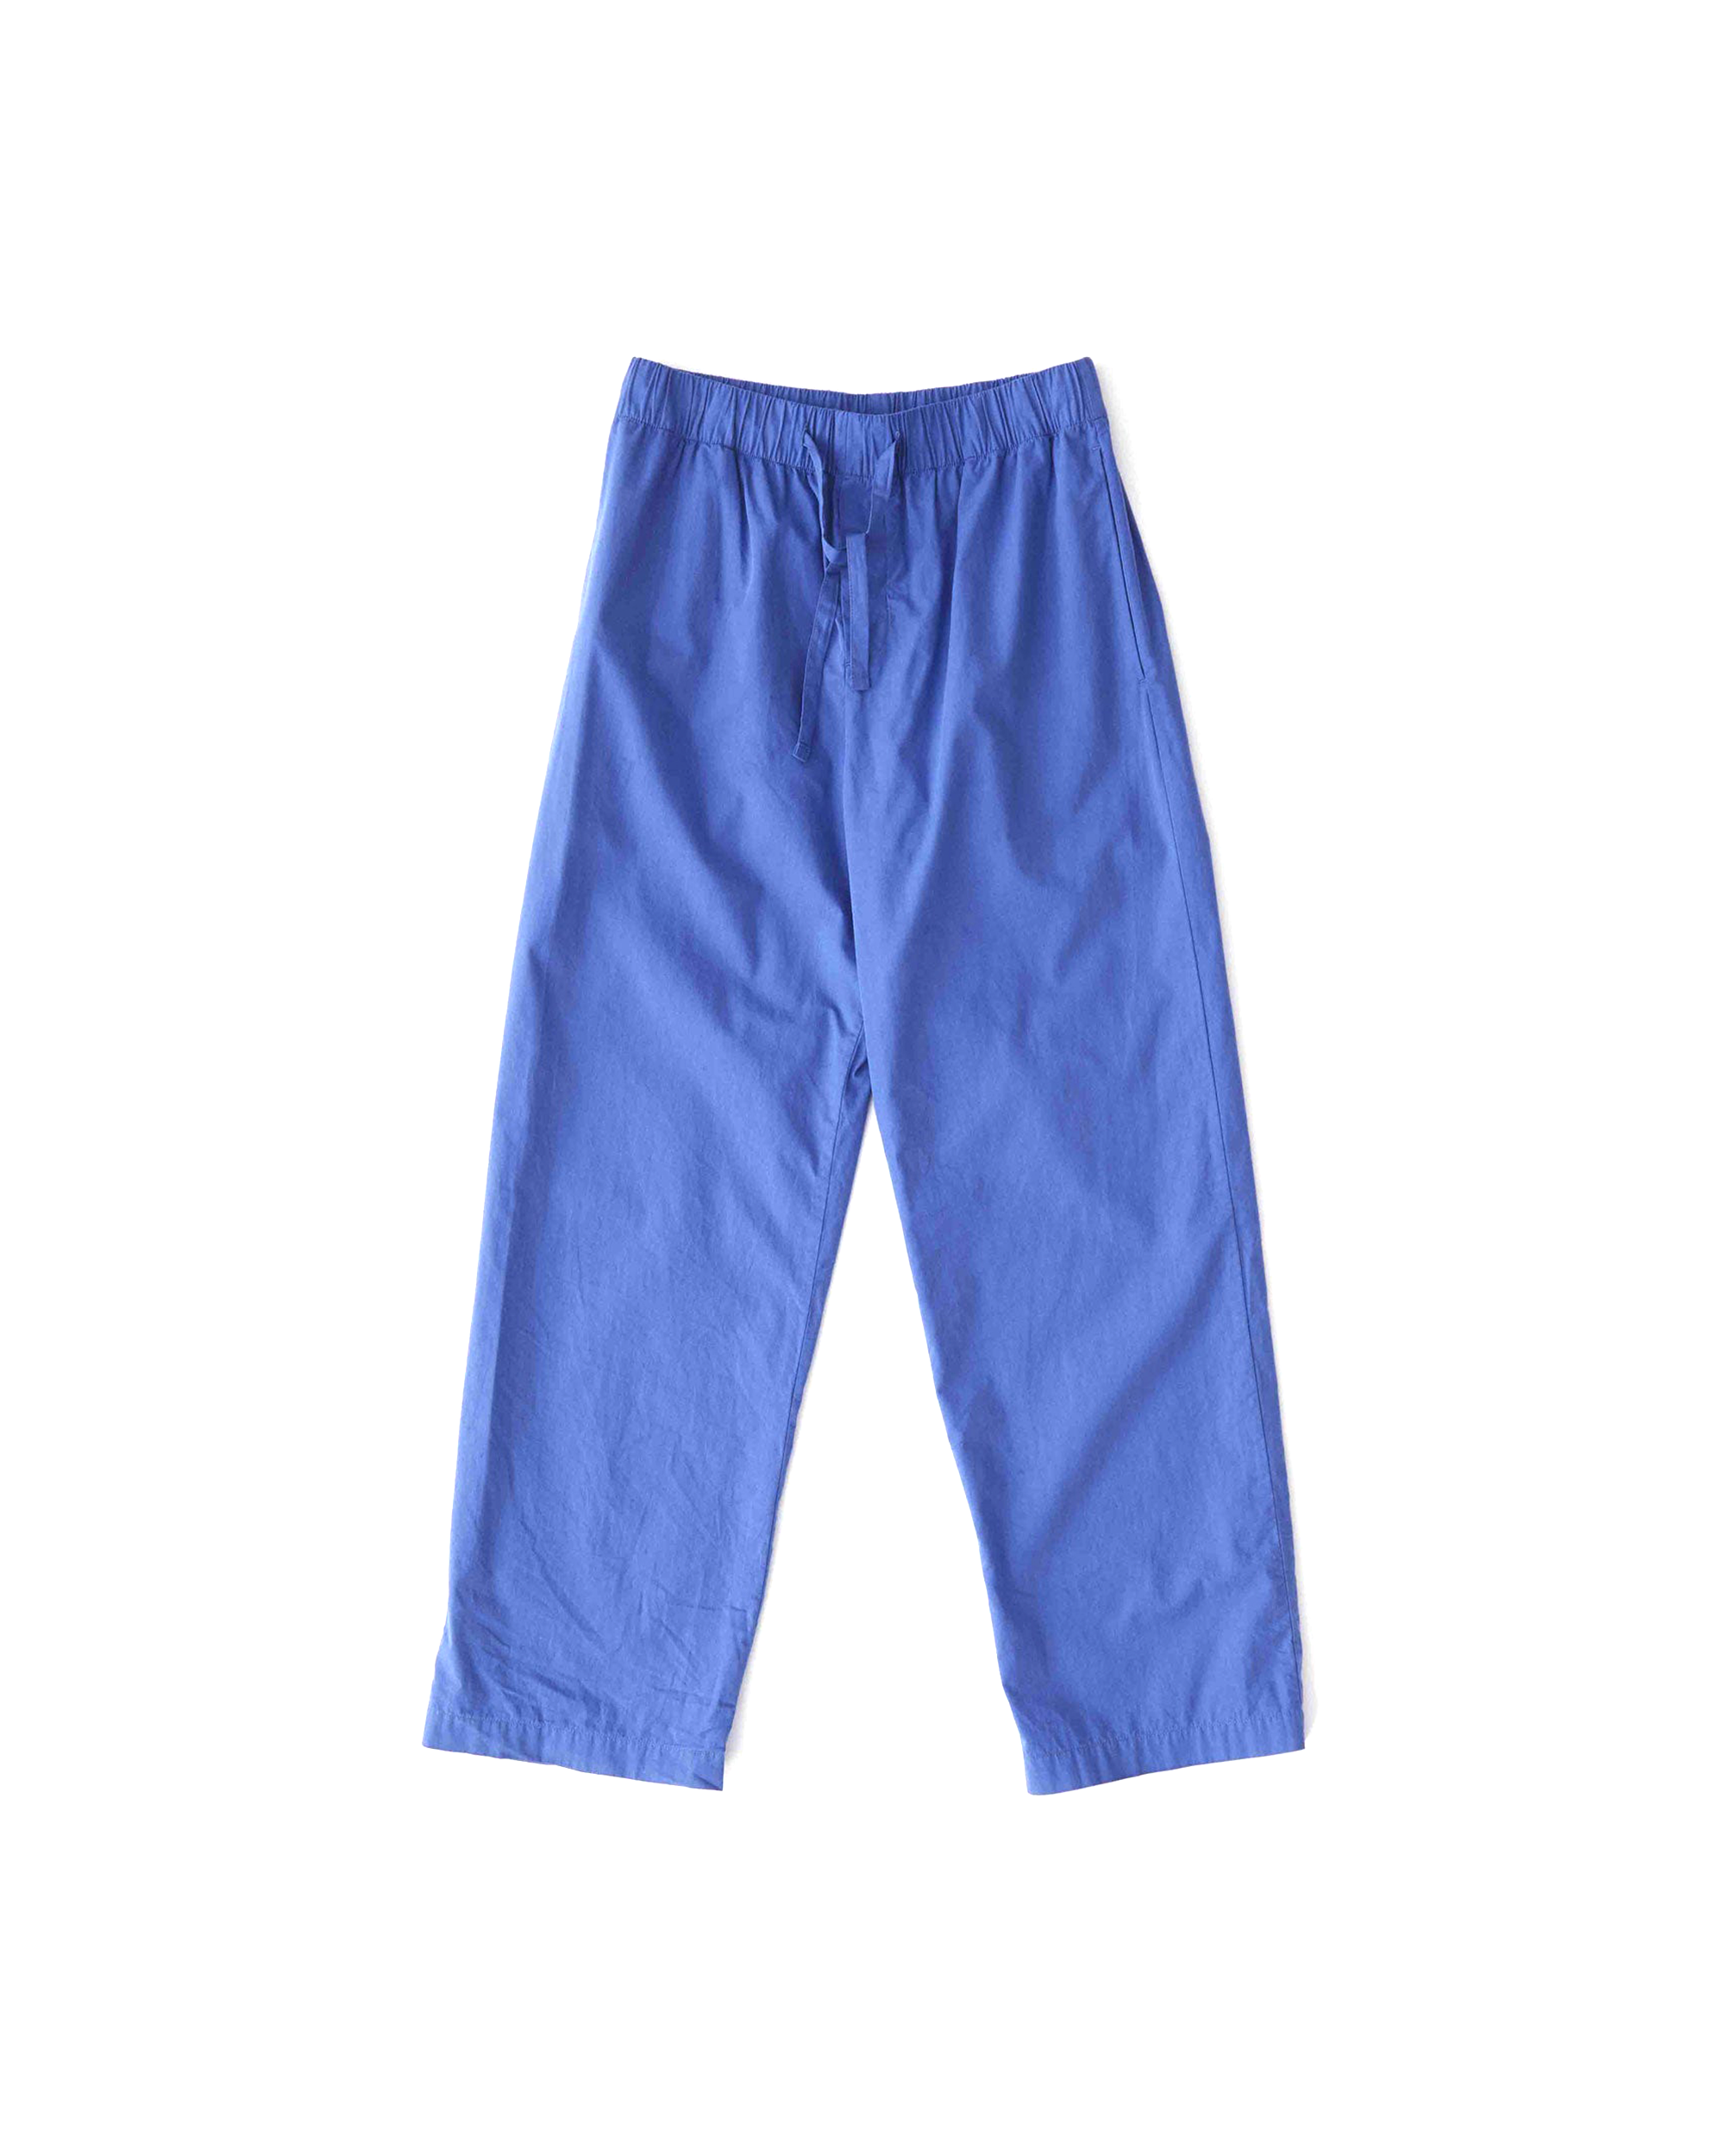 Sleepwear (Poplin) Pyjama Pant - Royal Blue